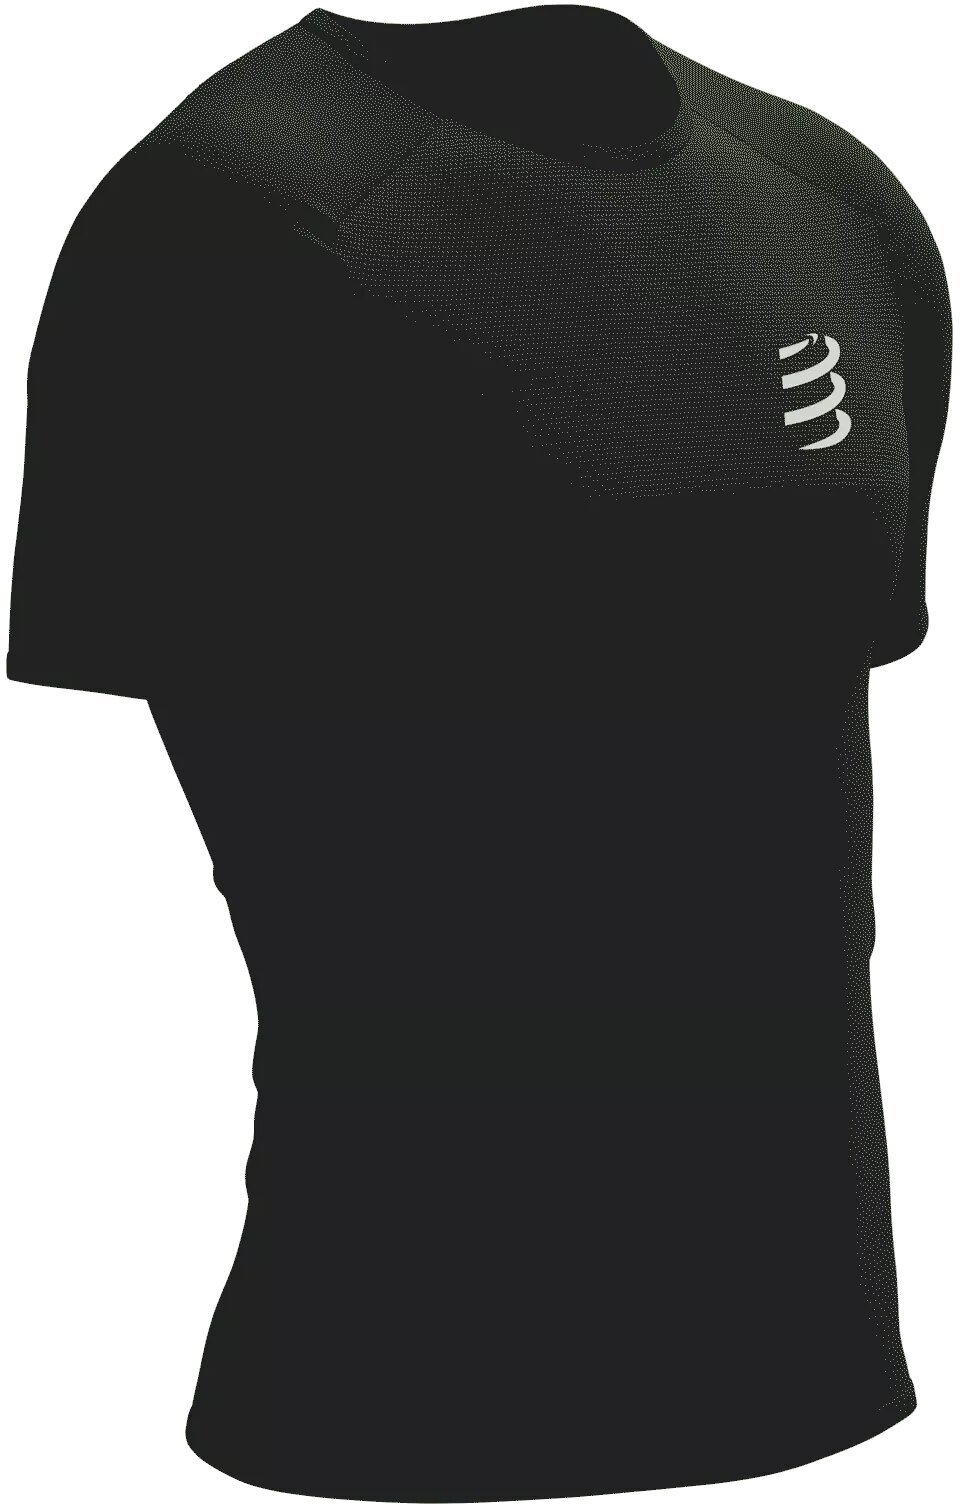 Camiseta para correr de manga corta Compressport Performance SS Tshirt M Black/White M Camiseta para correr de manga corta